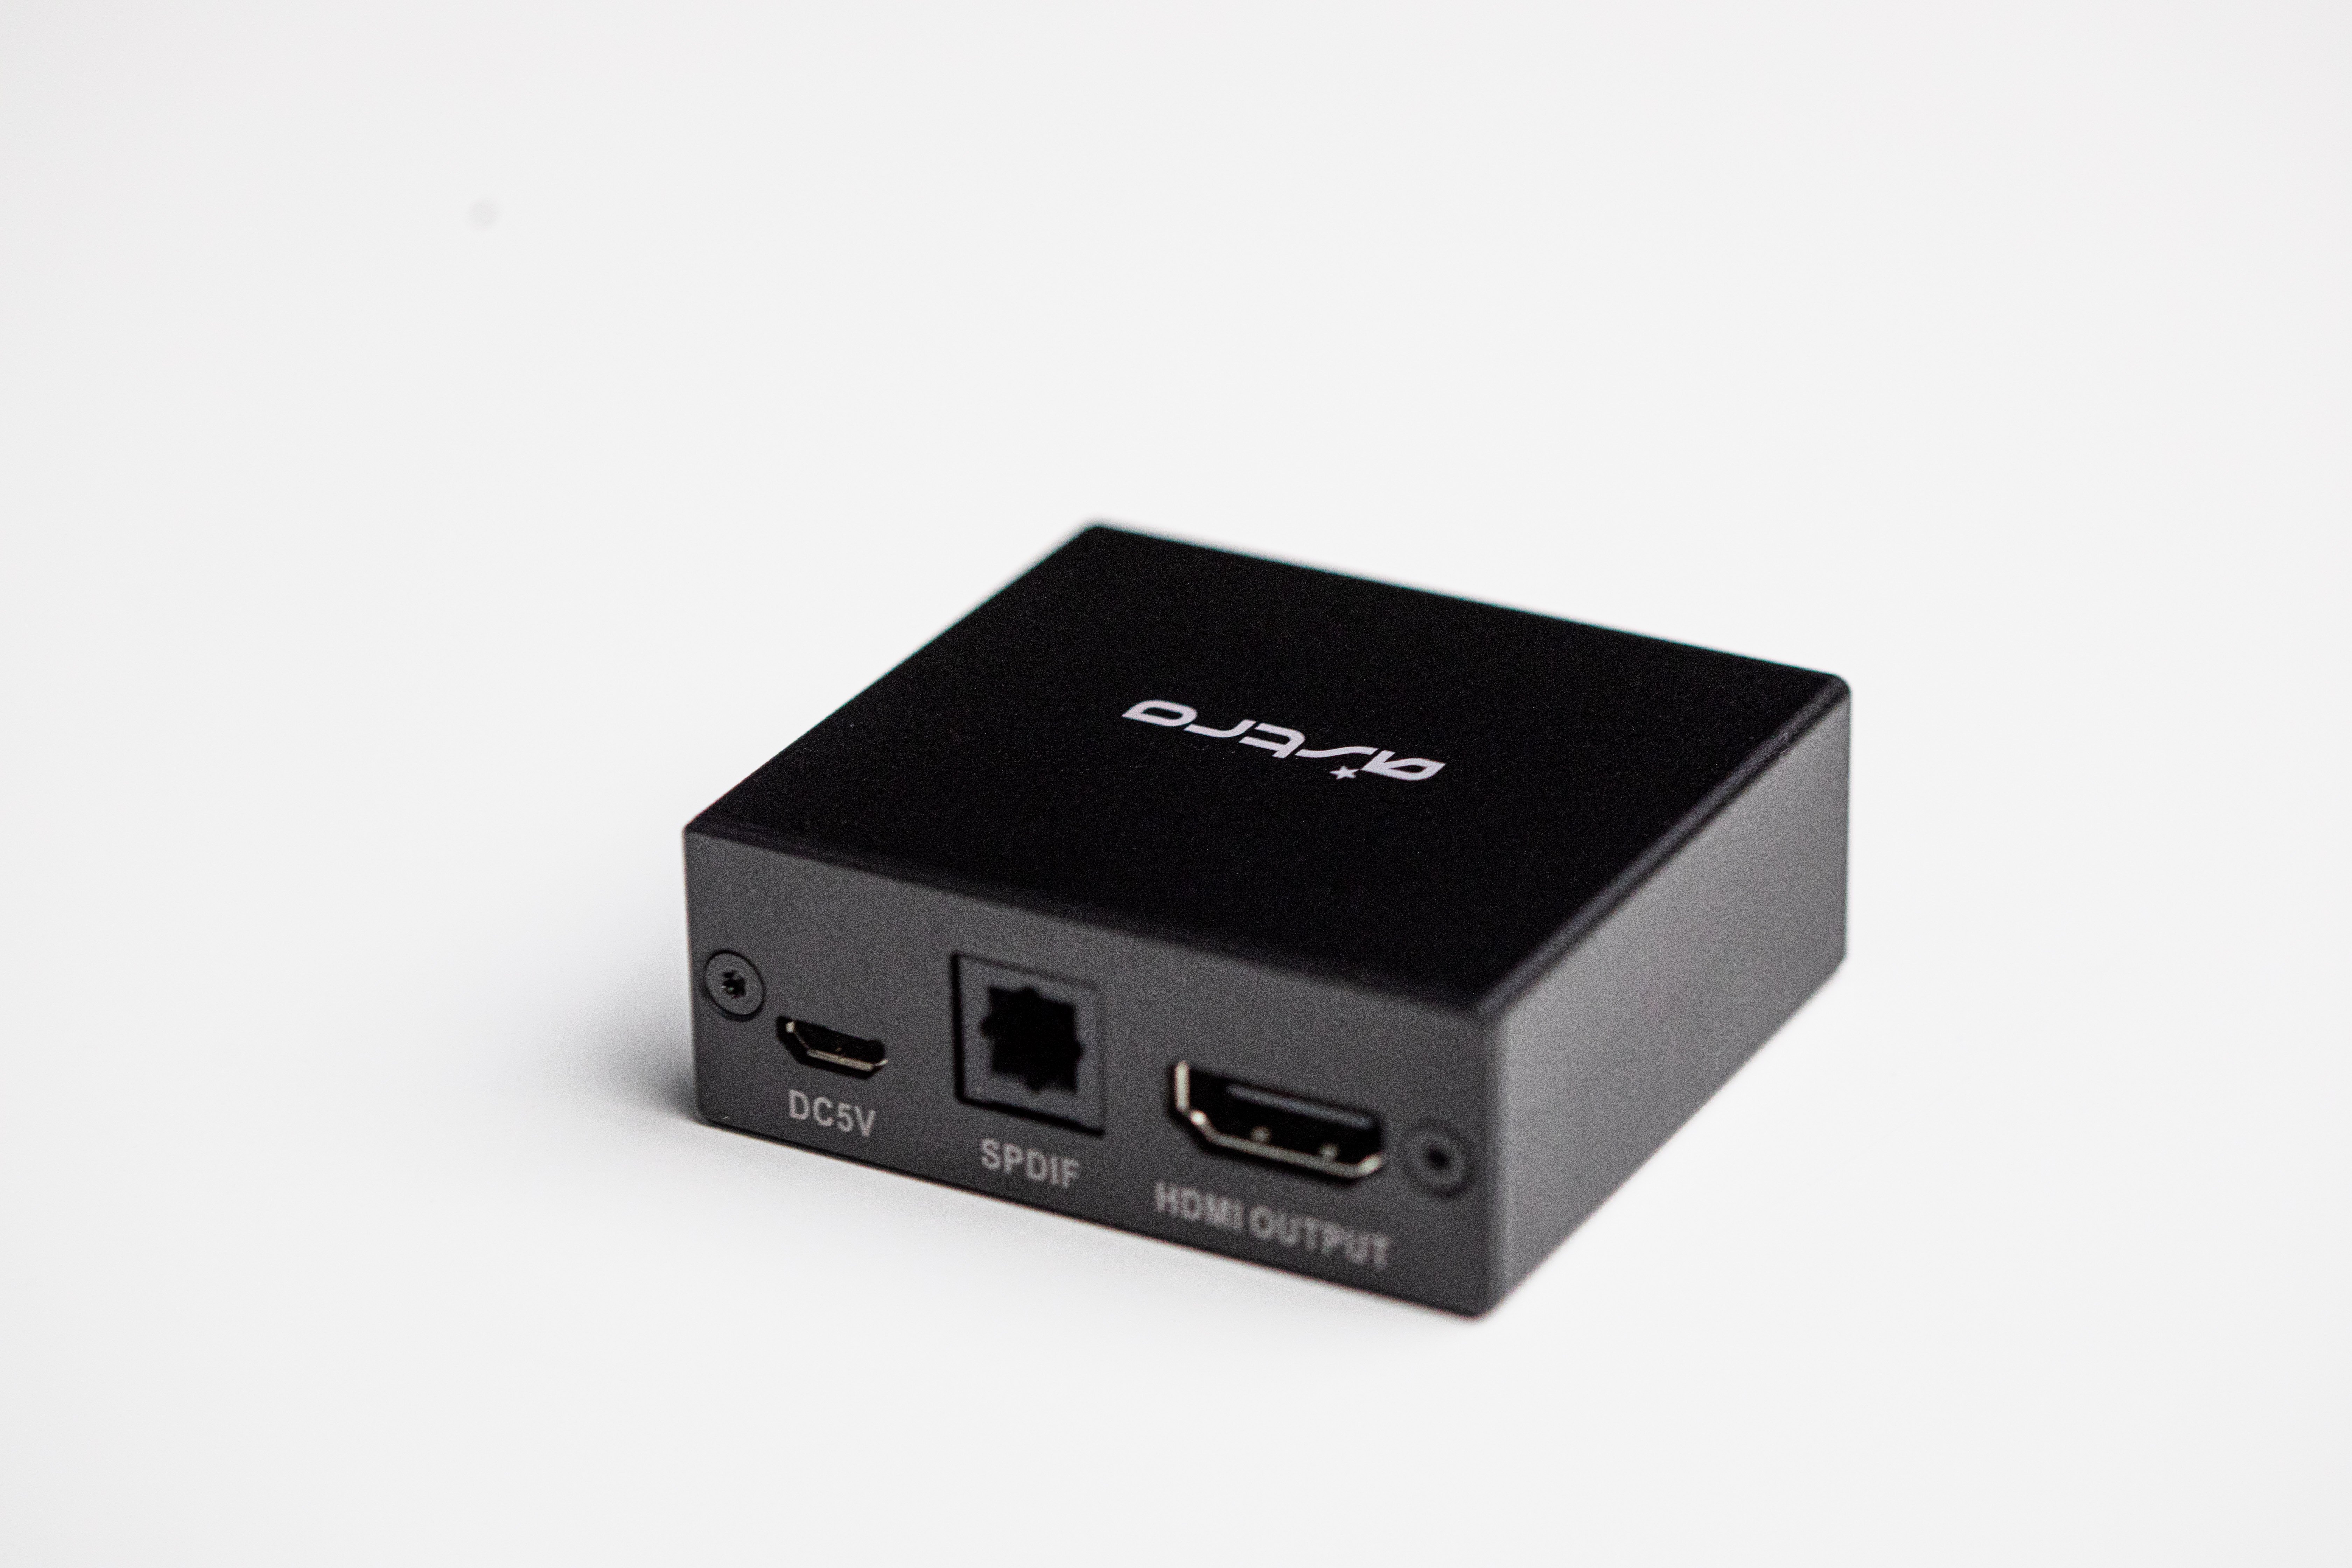 ASTRO Gaming HDMI Adapter for PlayStation 5 - BLACK - HDMI